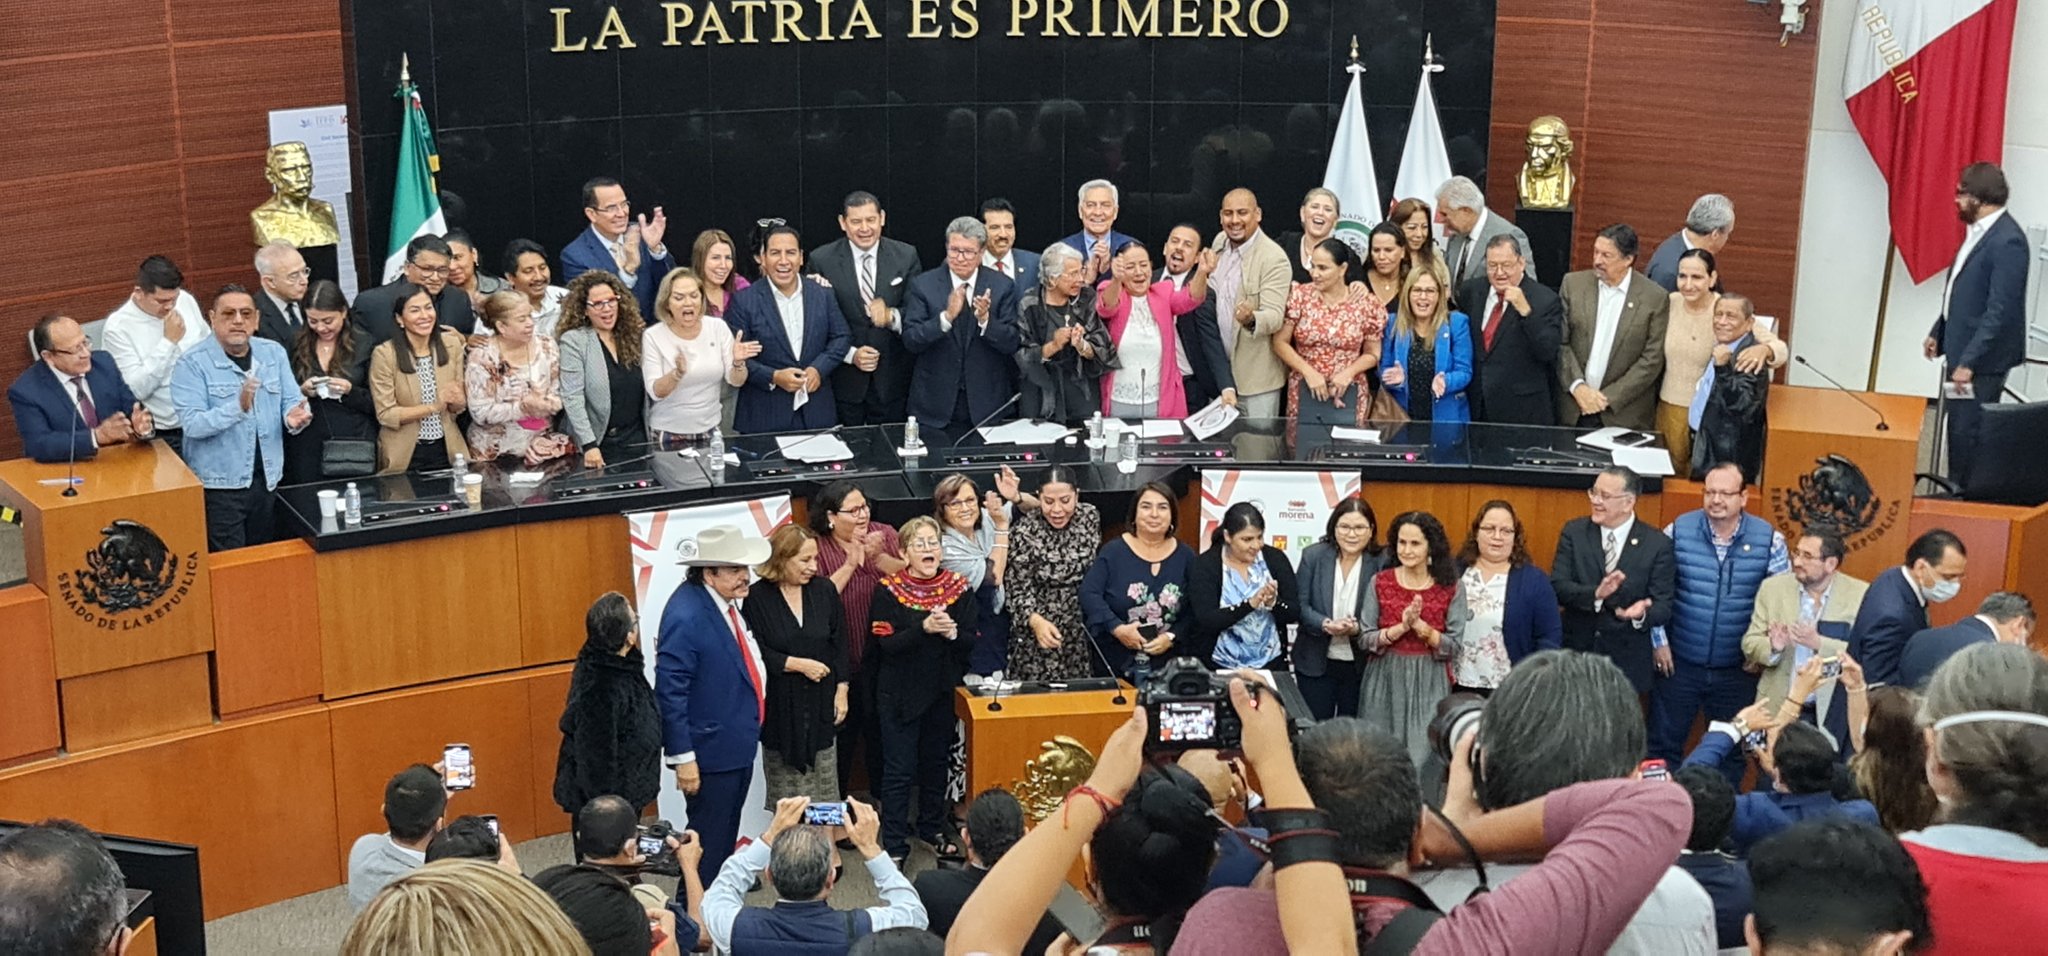 No se le hizo a Armenta: oposición pide a Monreal para presidir el Senado -  Infobae